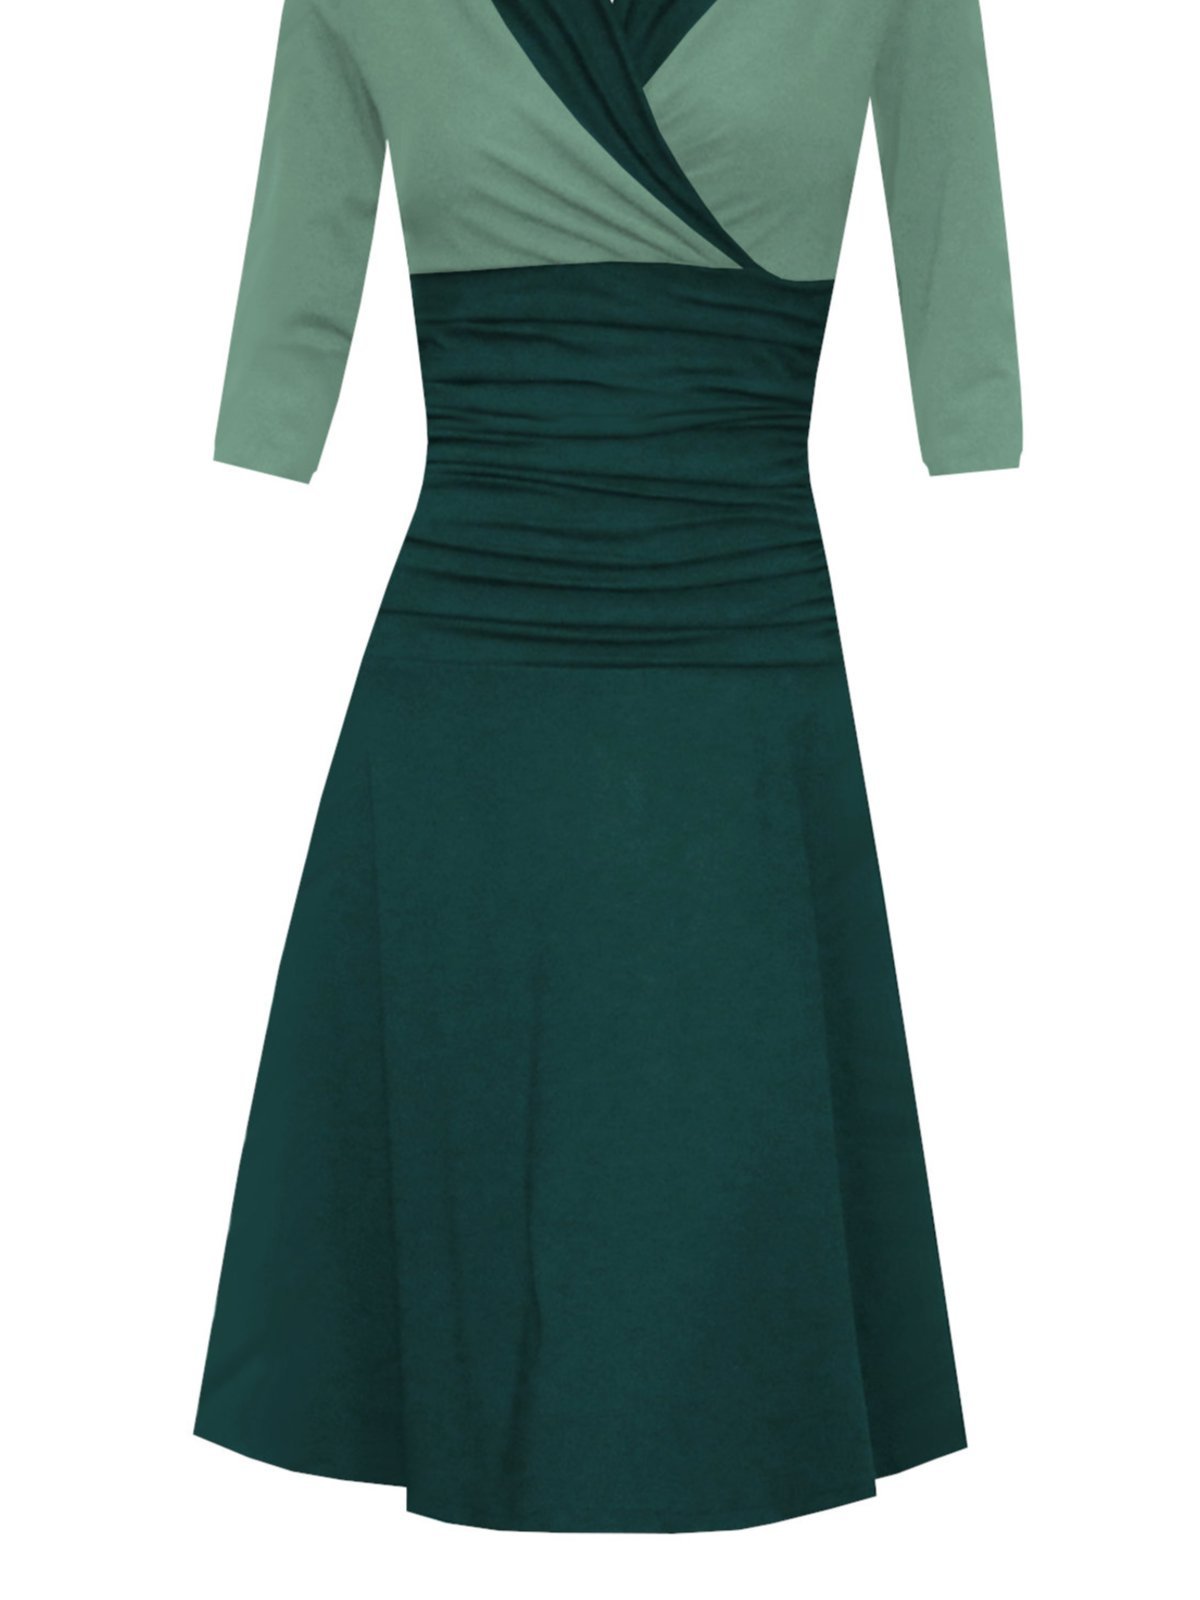 Long Sleeve V Neck Cotton-Blend Casual Knitting Dress